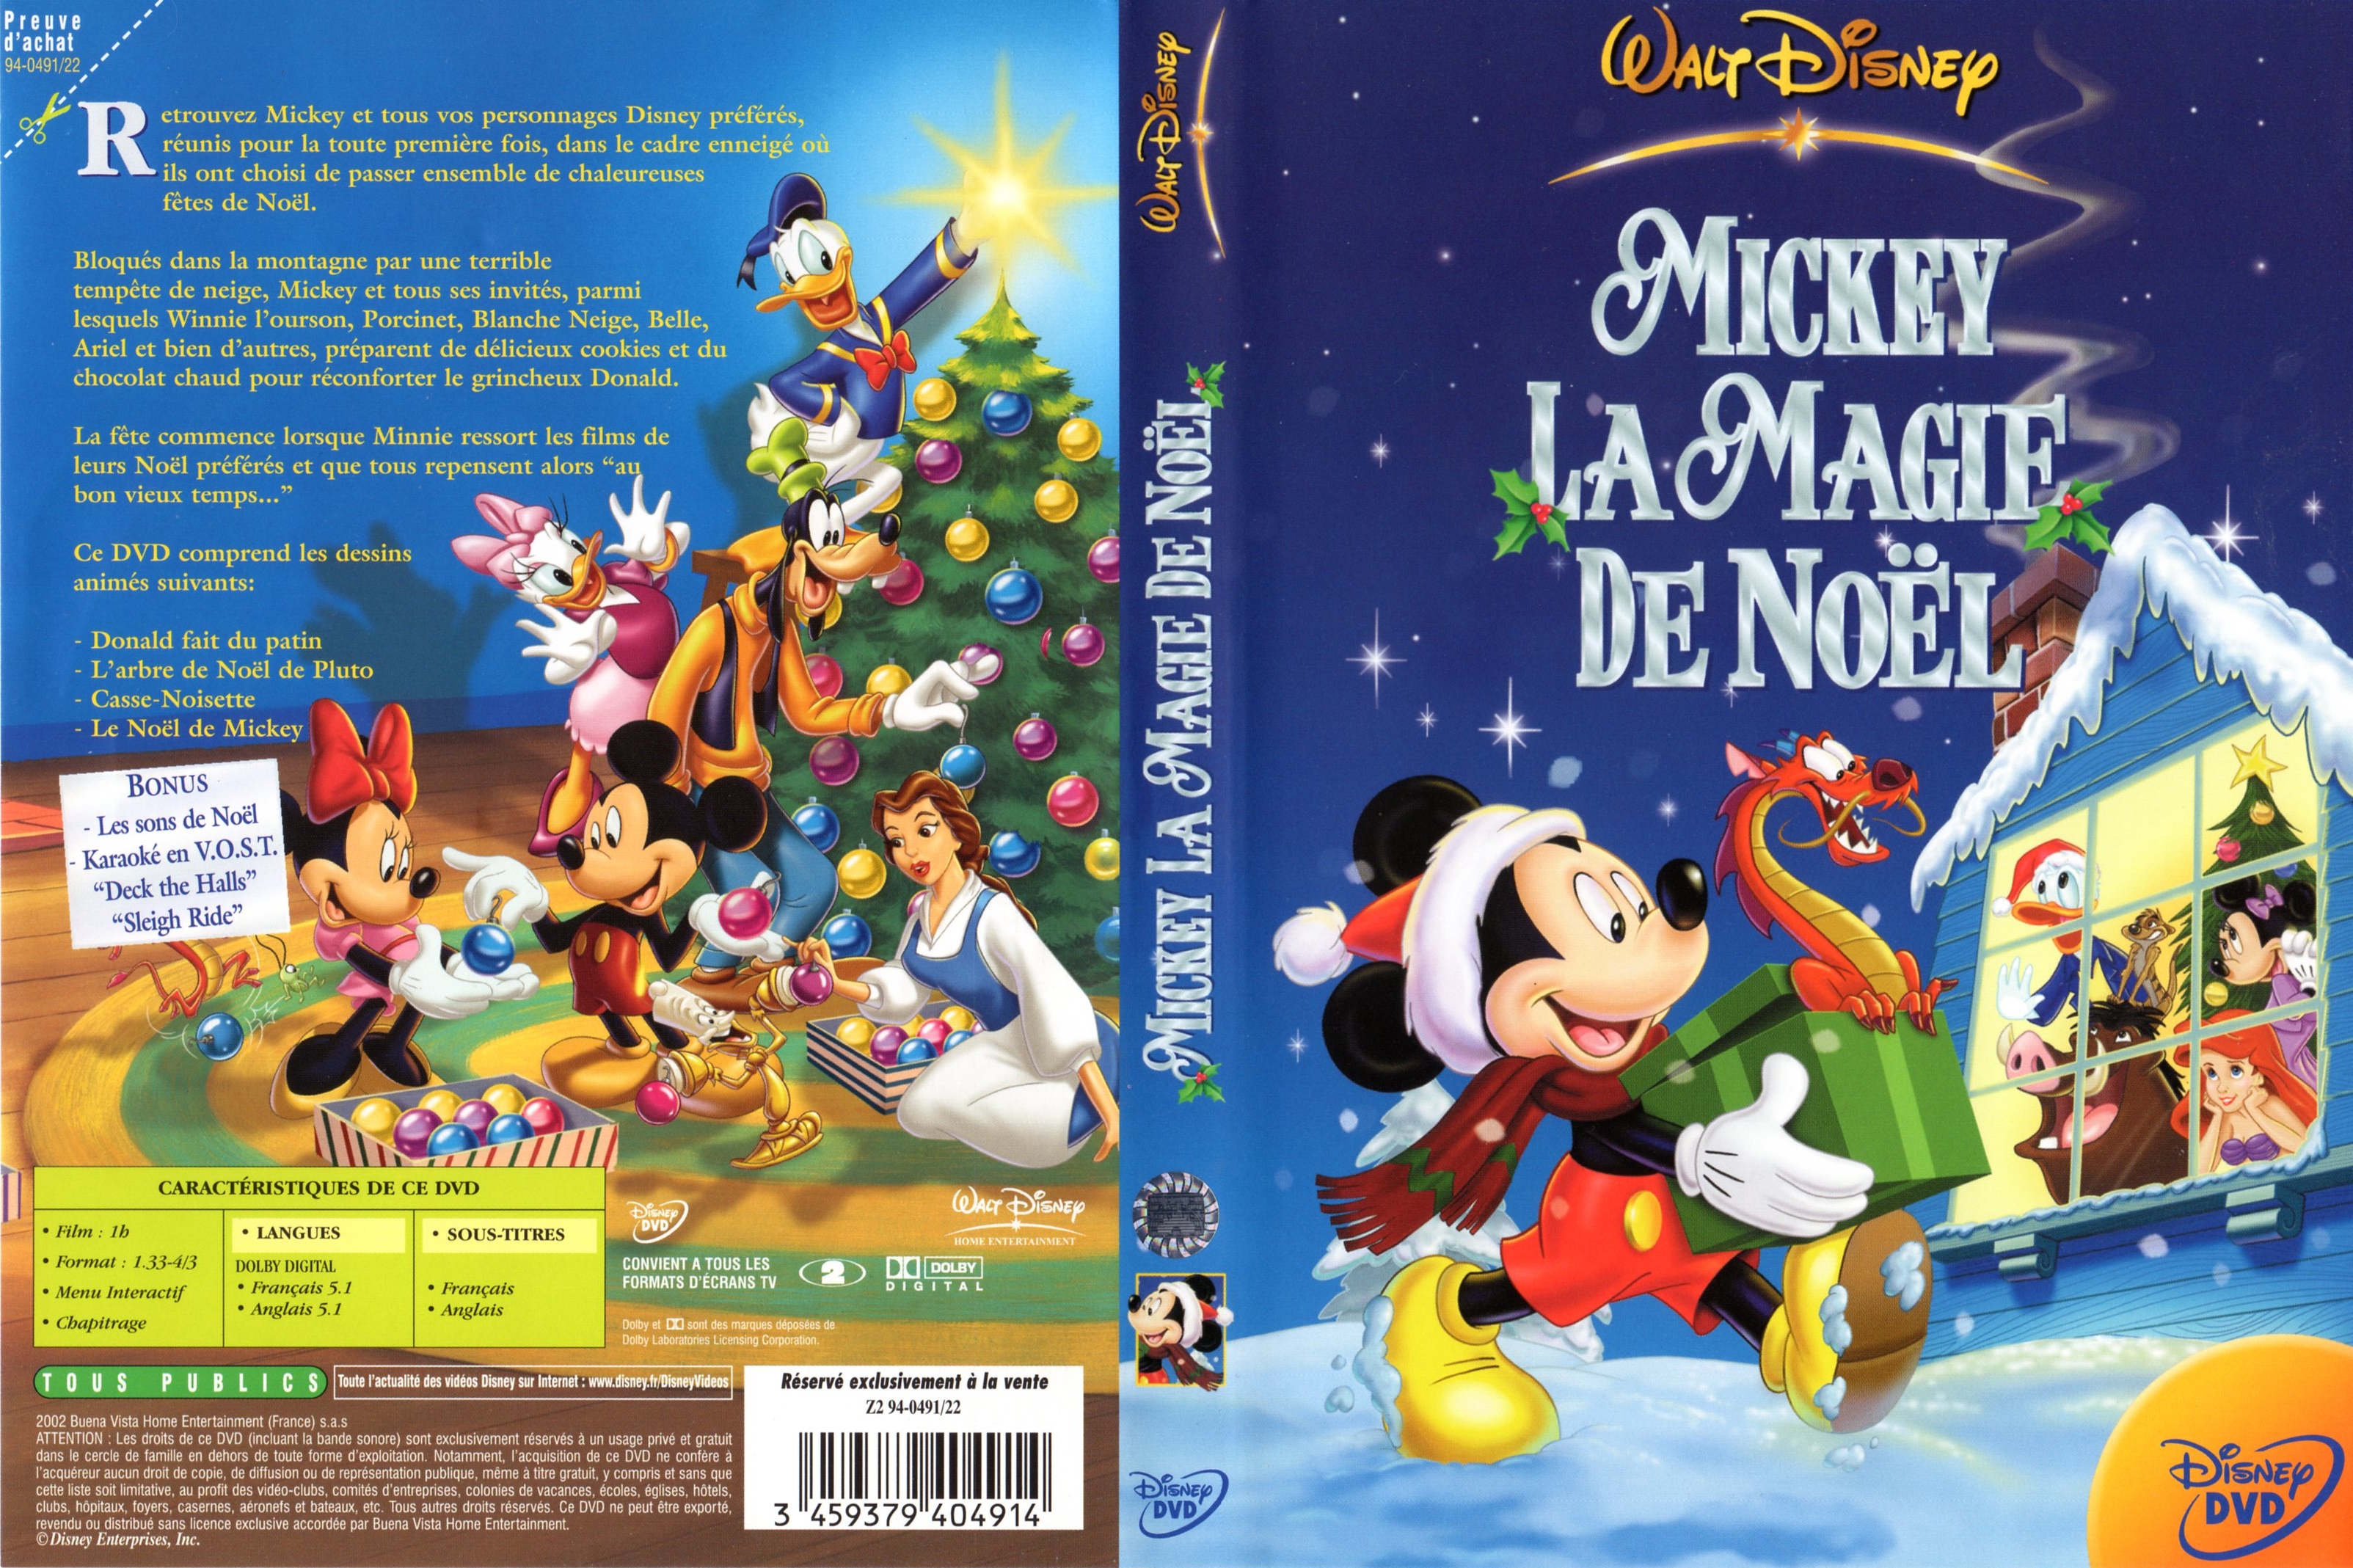 Jaquette DVD Mickey et la magie de noel v2